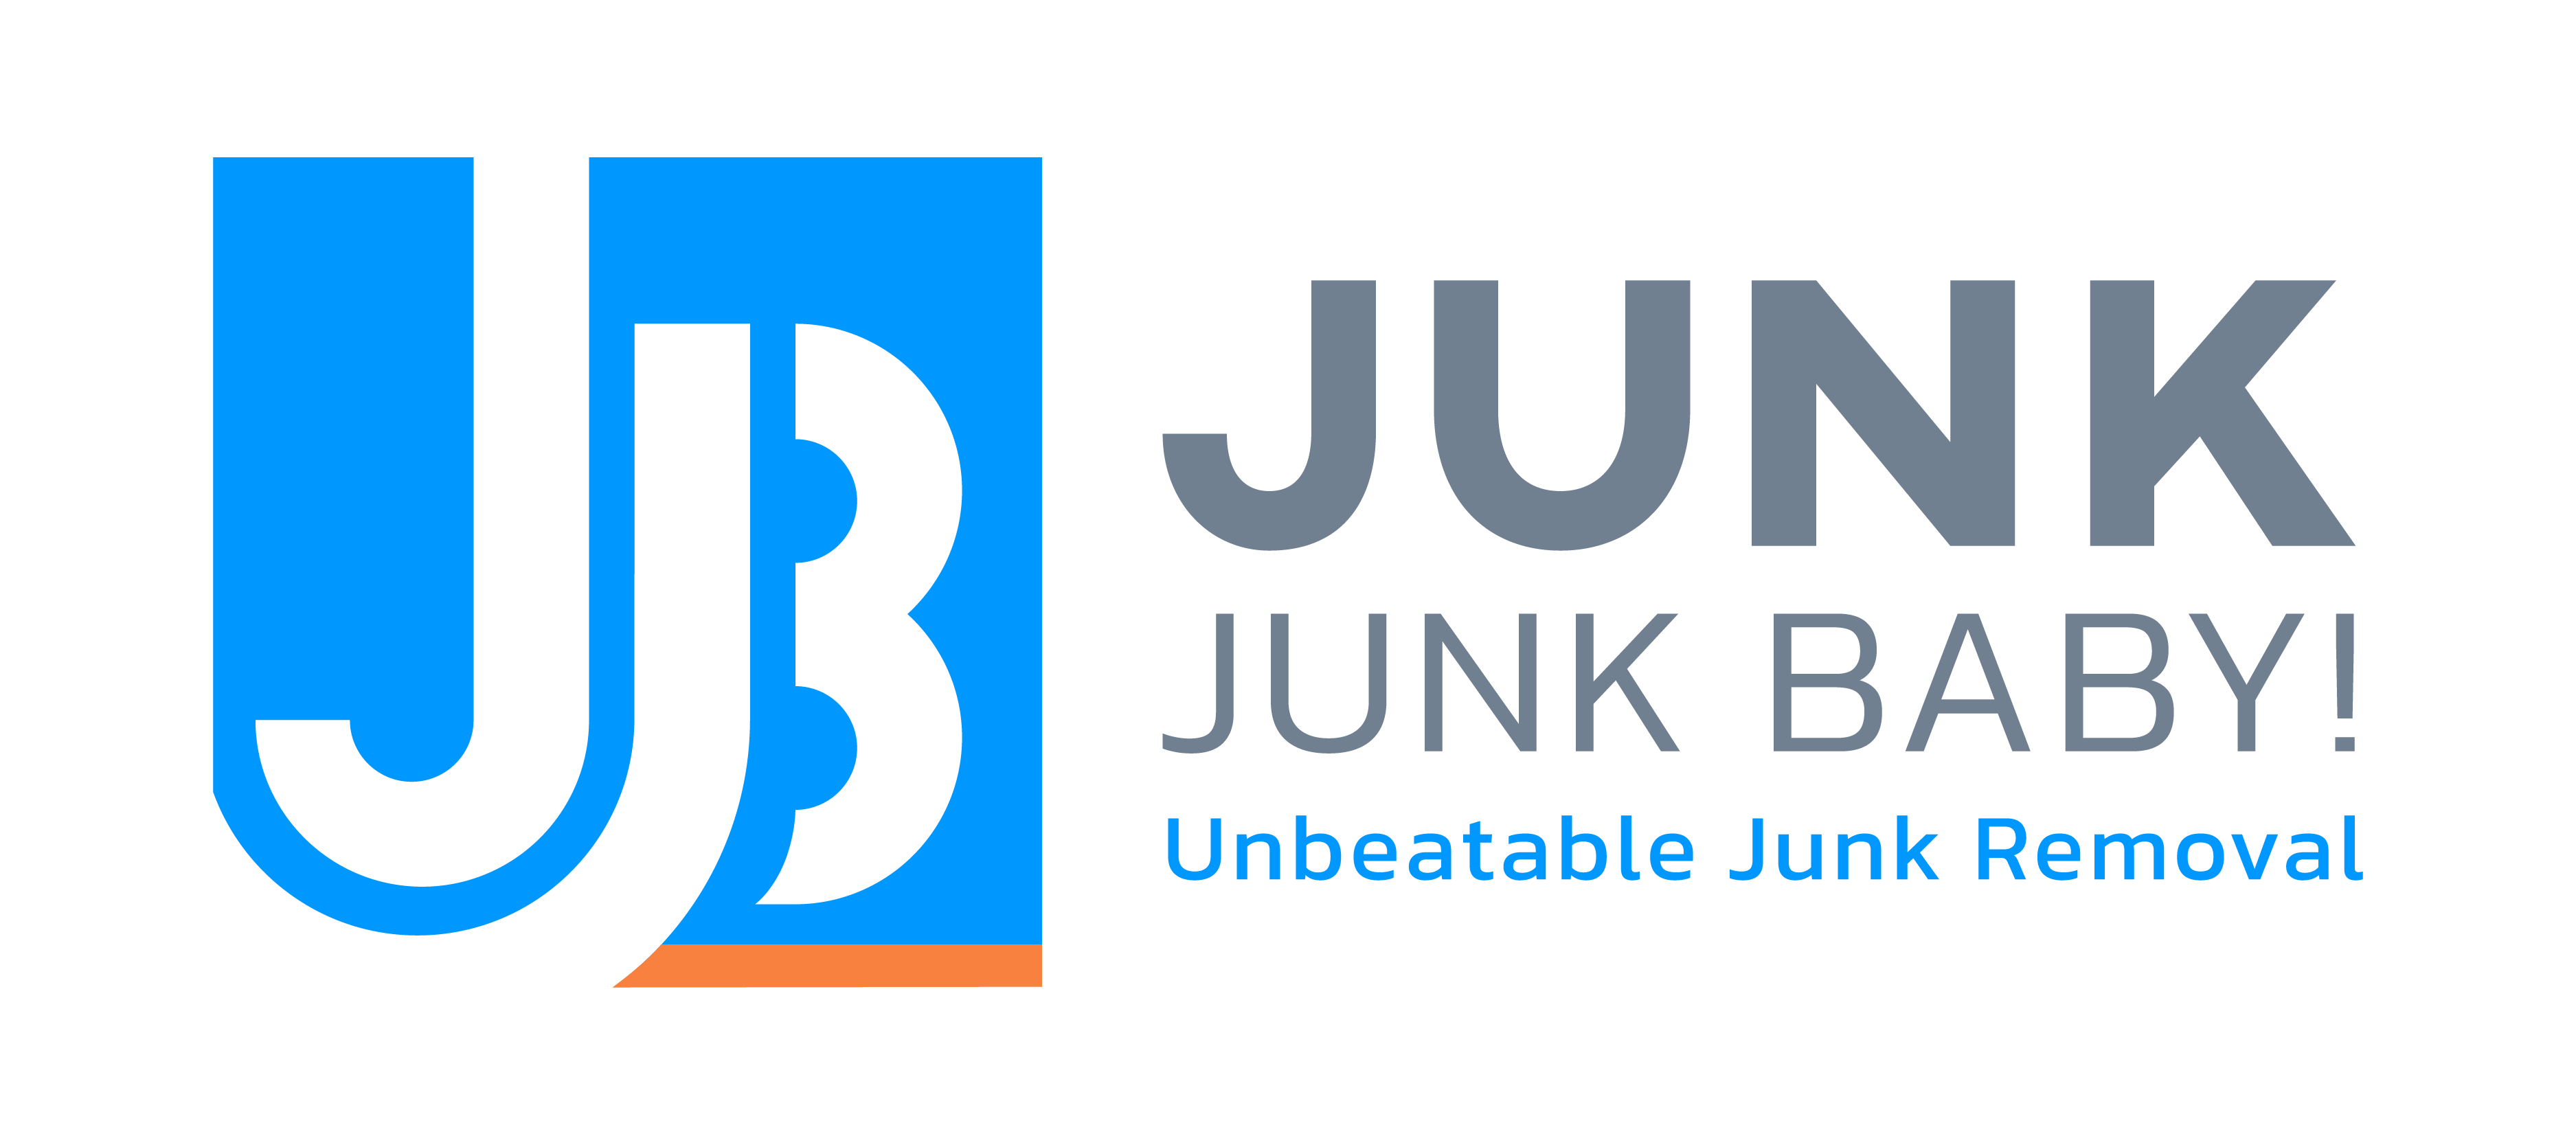 Junk Junk Baby!